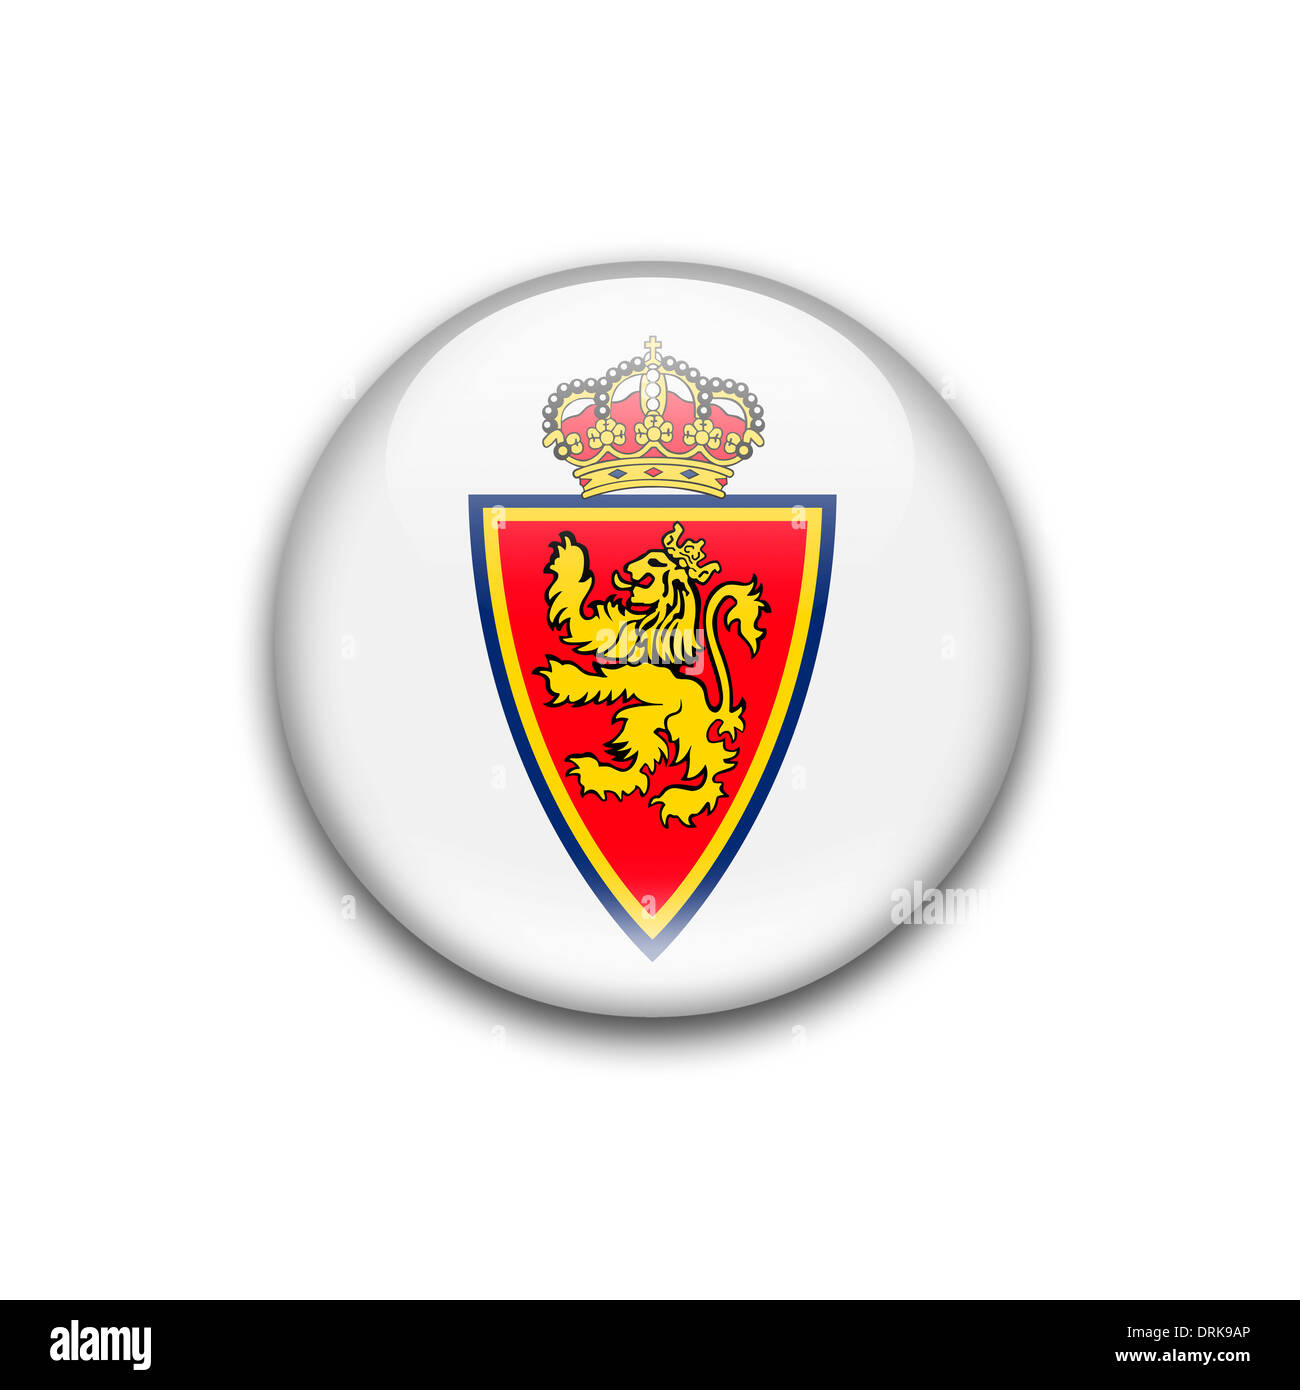 Real Zaragoza logo flag icon emblem symbol Stock Photo - Alamy